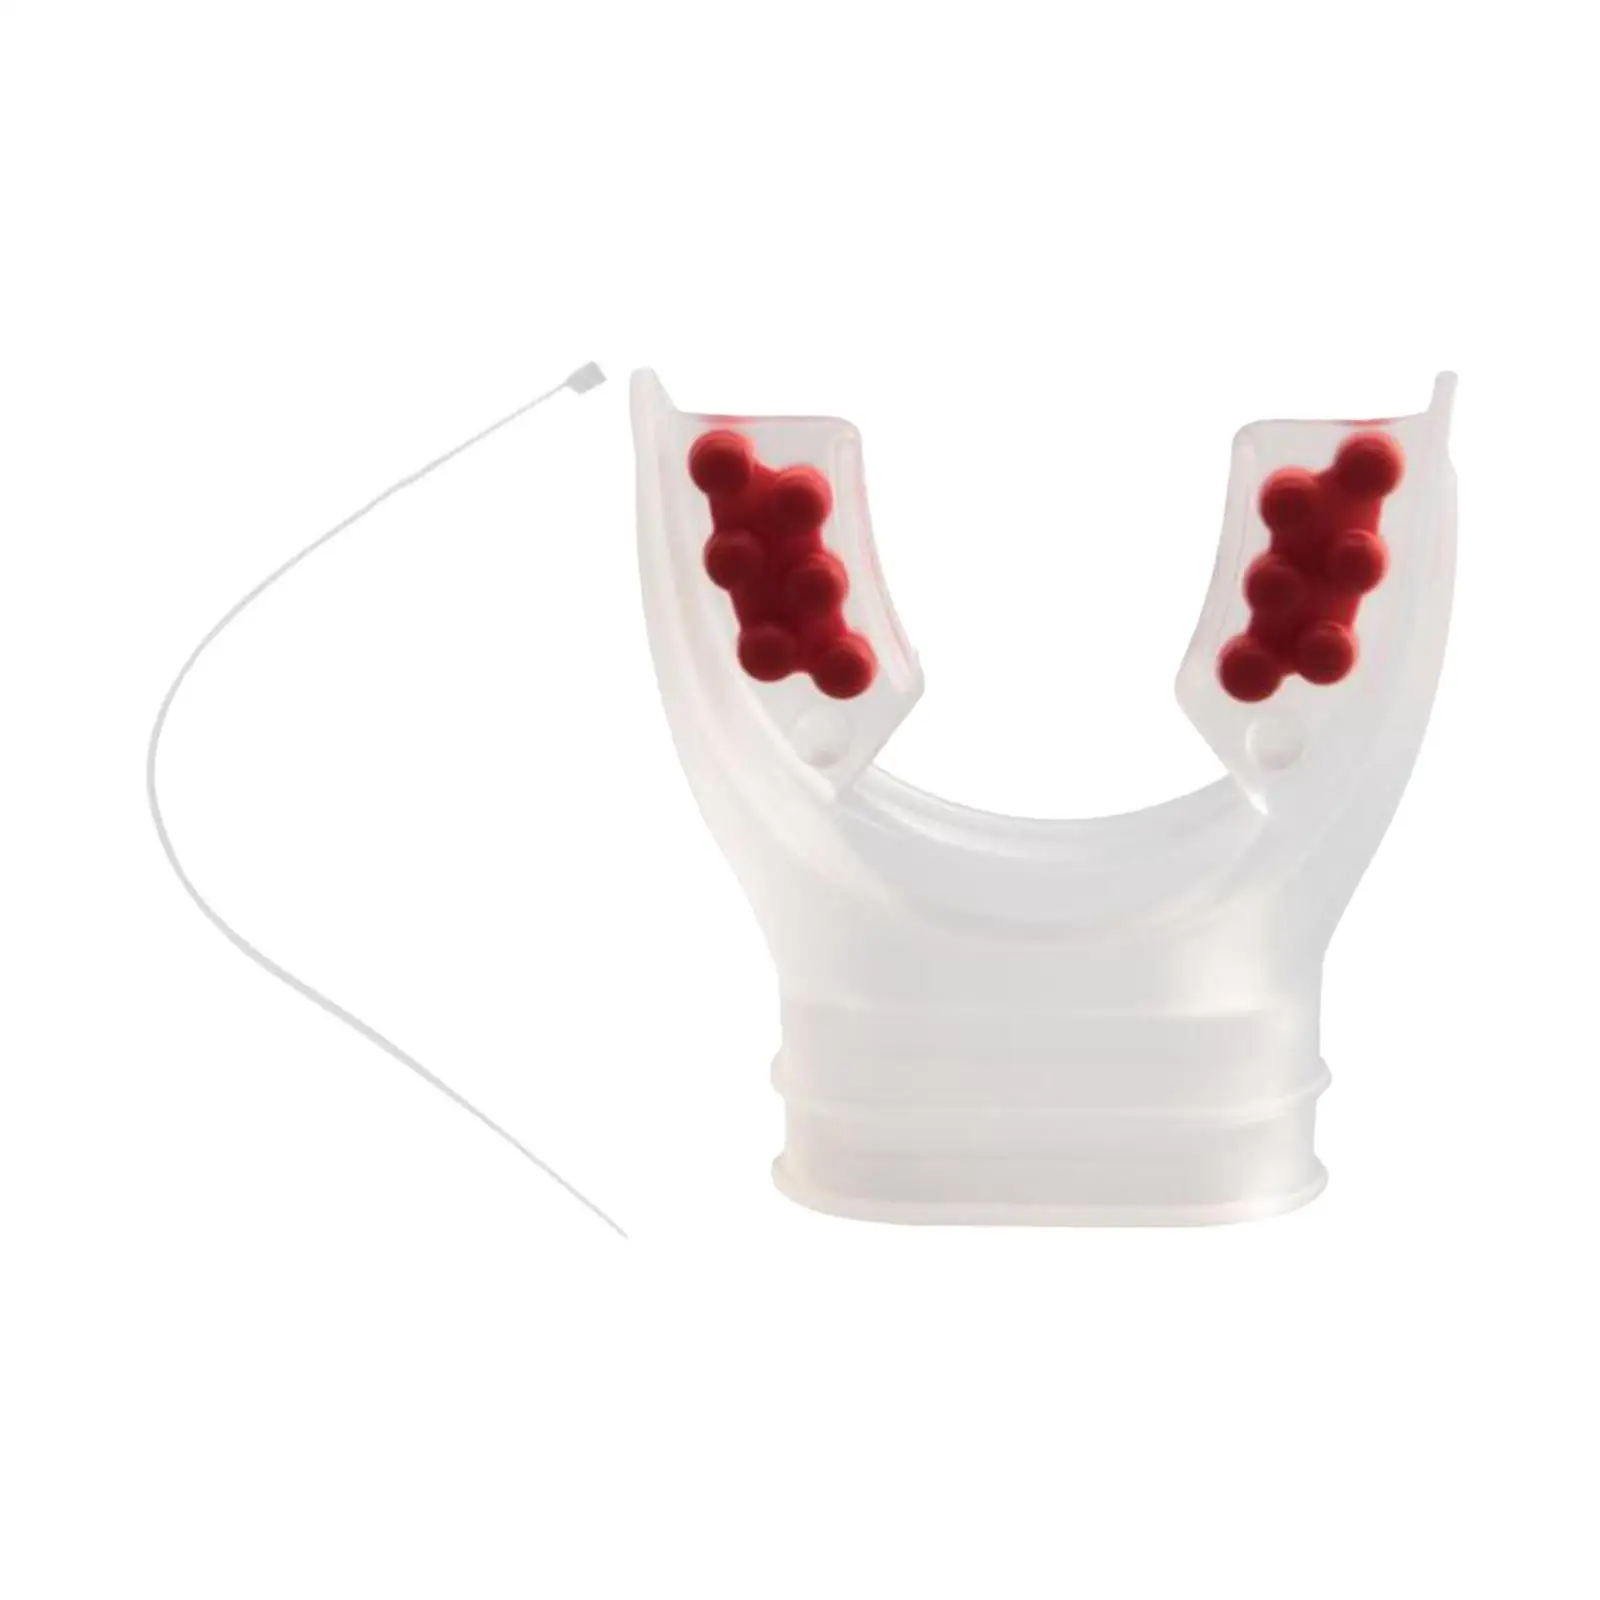 -Mouthpiece regulator mouthpiece for most standard regulators